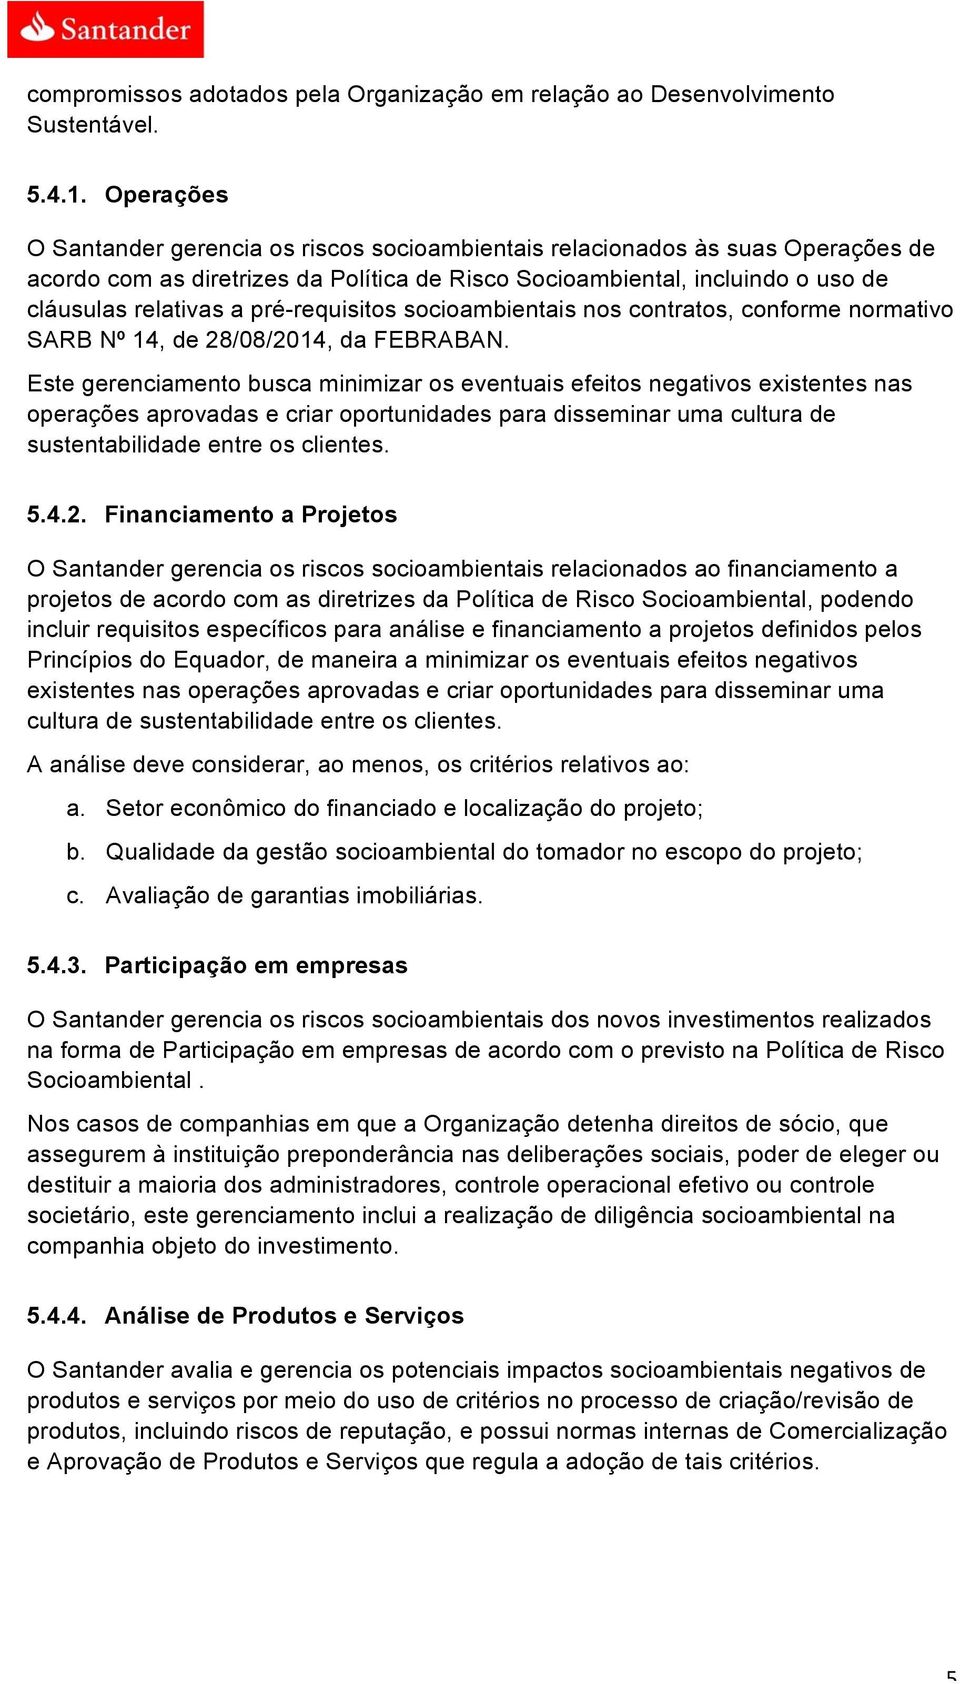 pré-requisitos socioambientais nos contratos, conforme normativo SARB Nº 14, de 28/08/2014, da FEBRABAN.